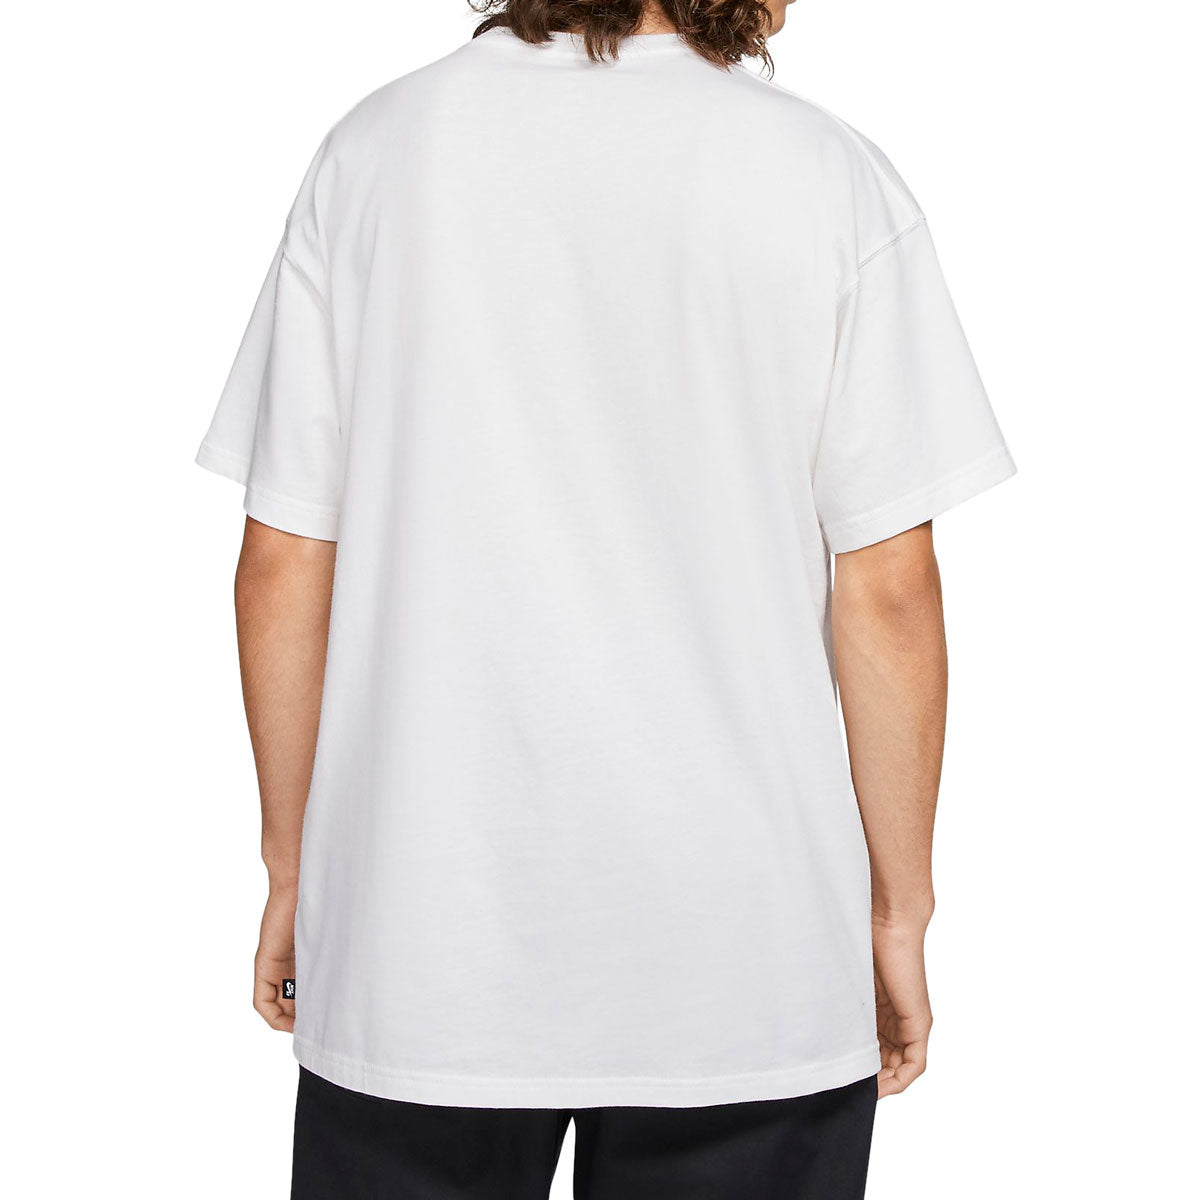 Nike SB T-Shirt - White/Black image 2